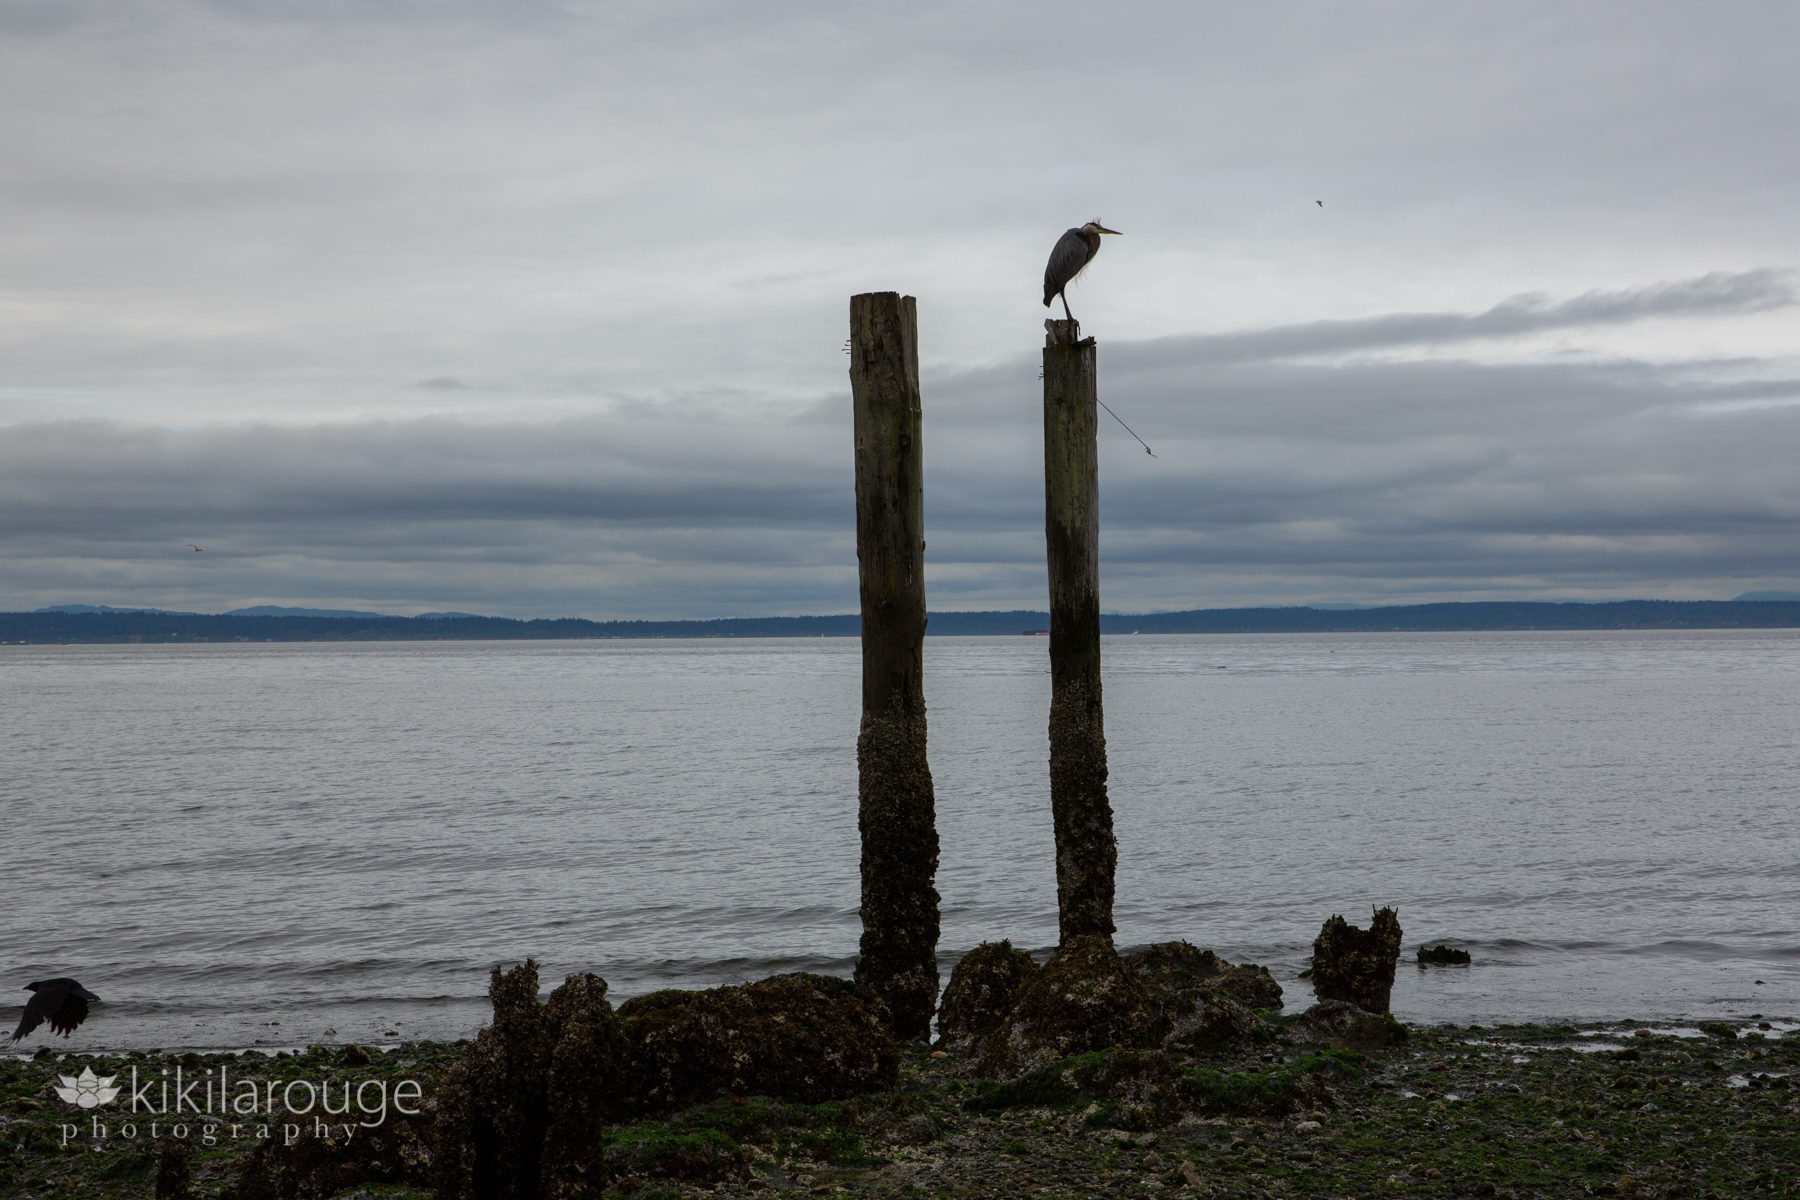 Blue Heron atop old post at Puget Sound